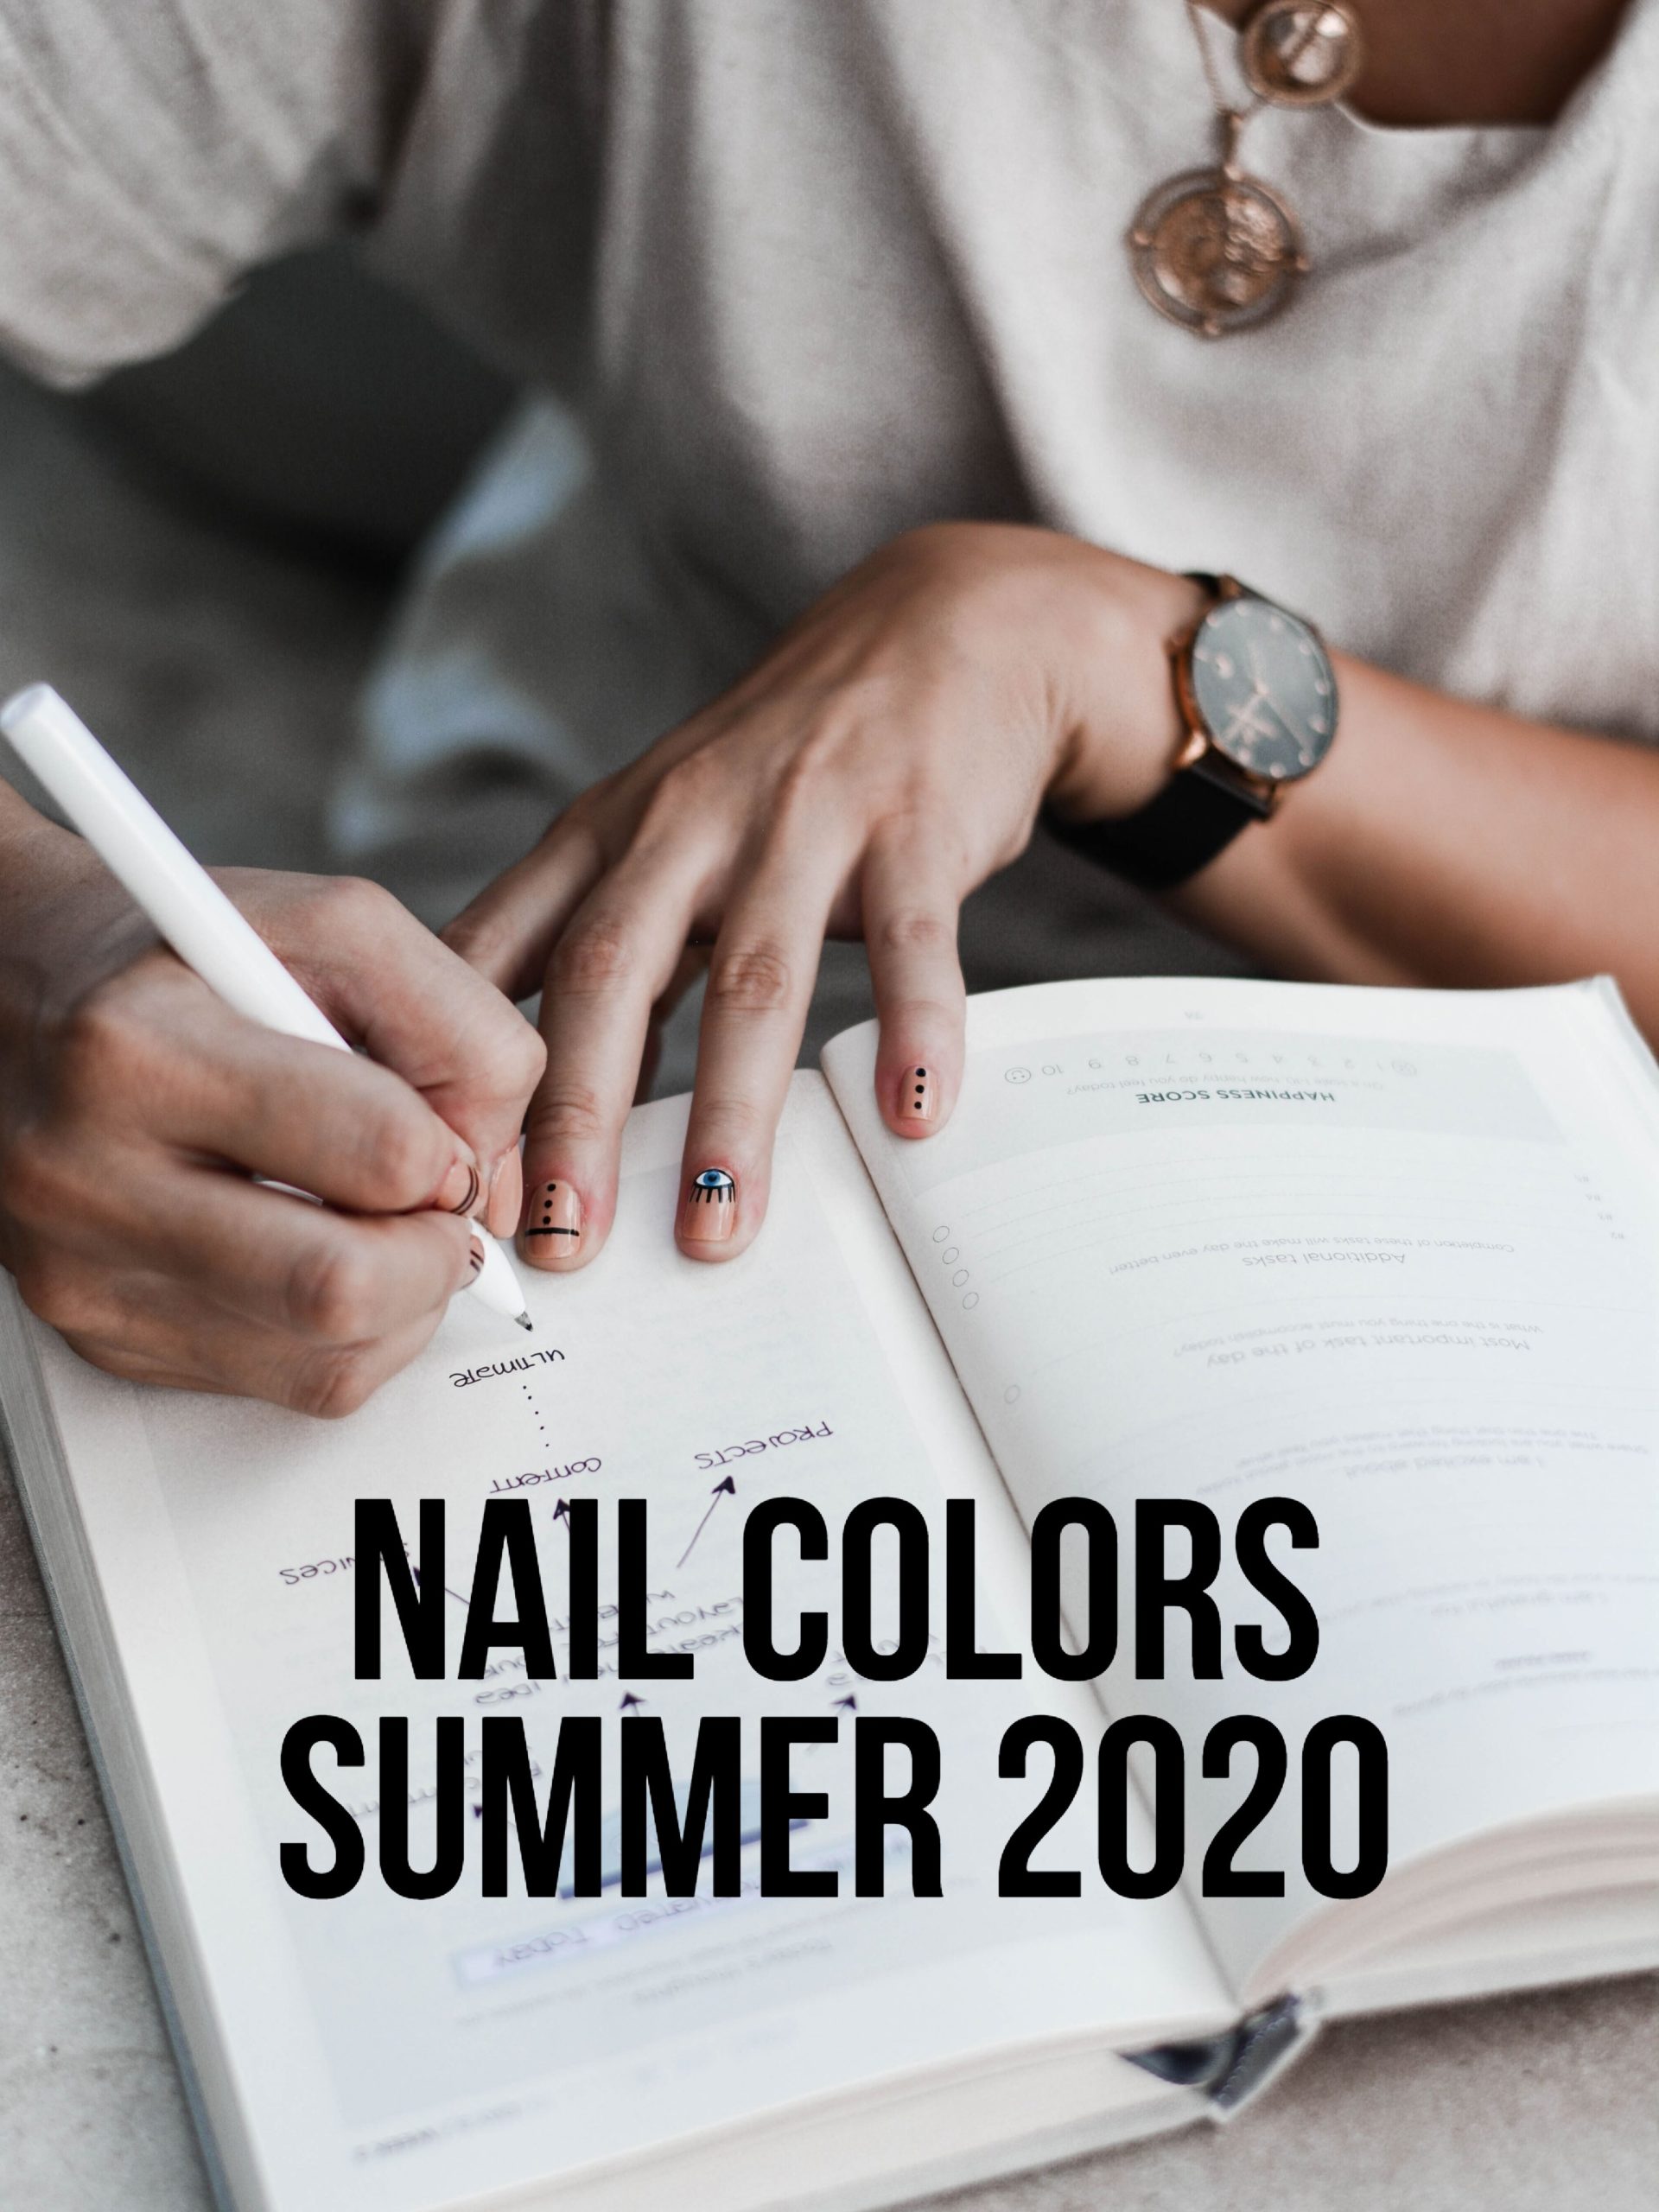 Nail Colors Summer 2020 - The Fashion Folks